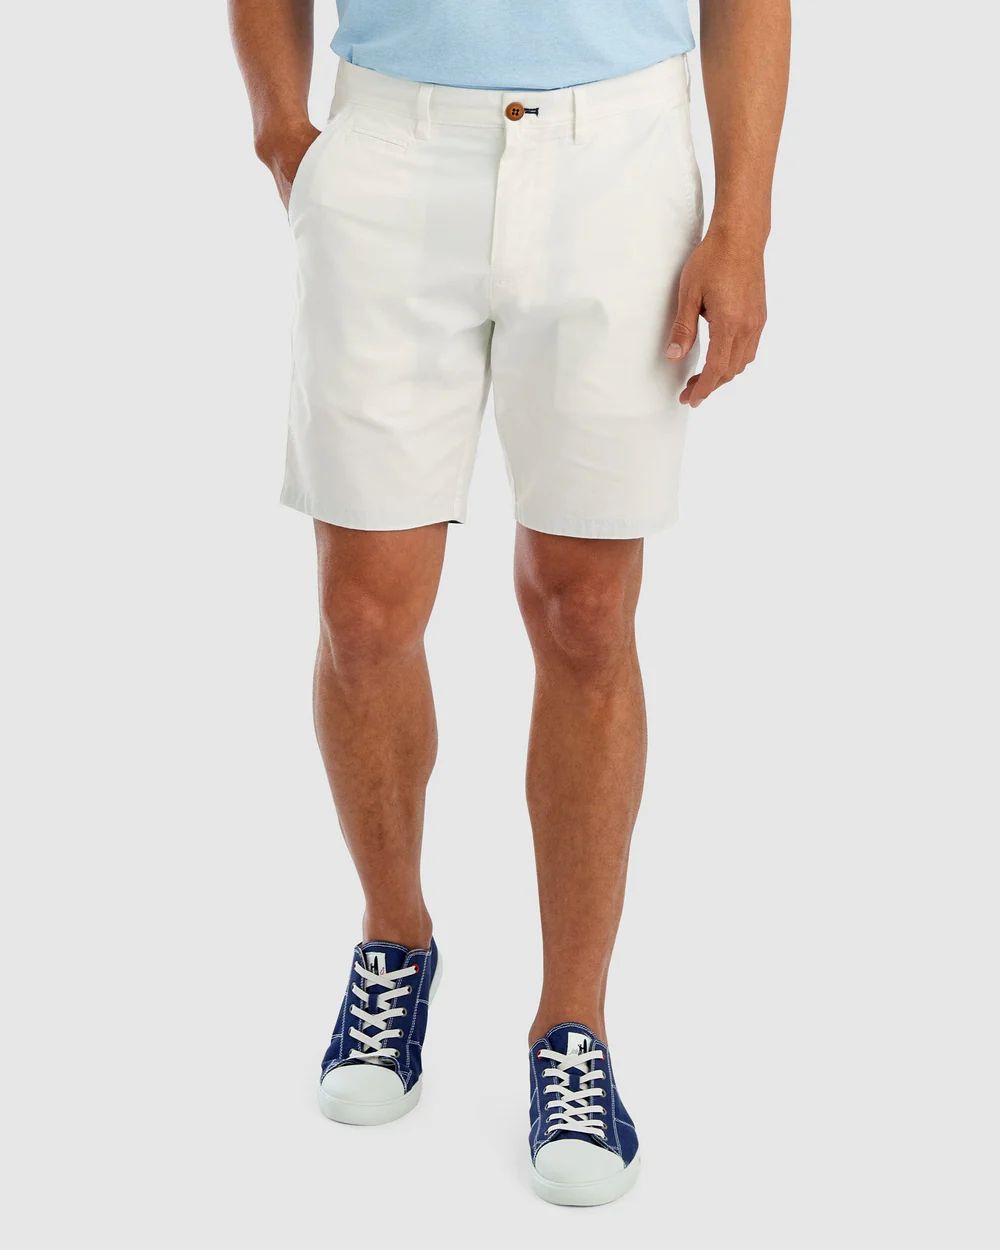 Men's Preppy Shorts - Santiago Cotton Stretch Shorts | johnnie O